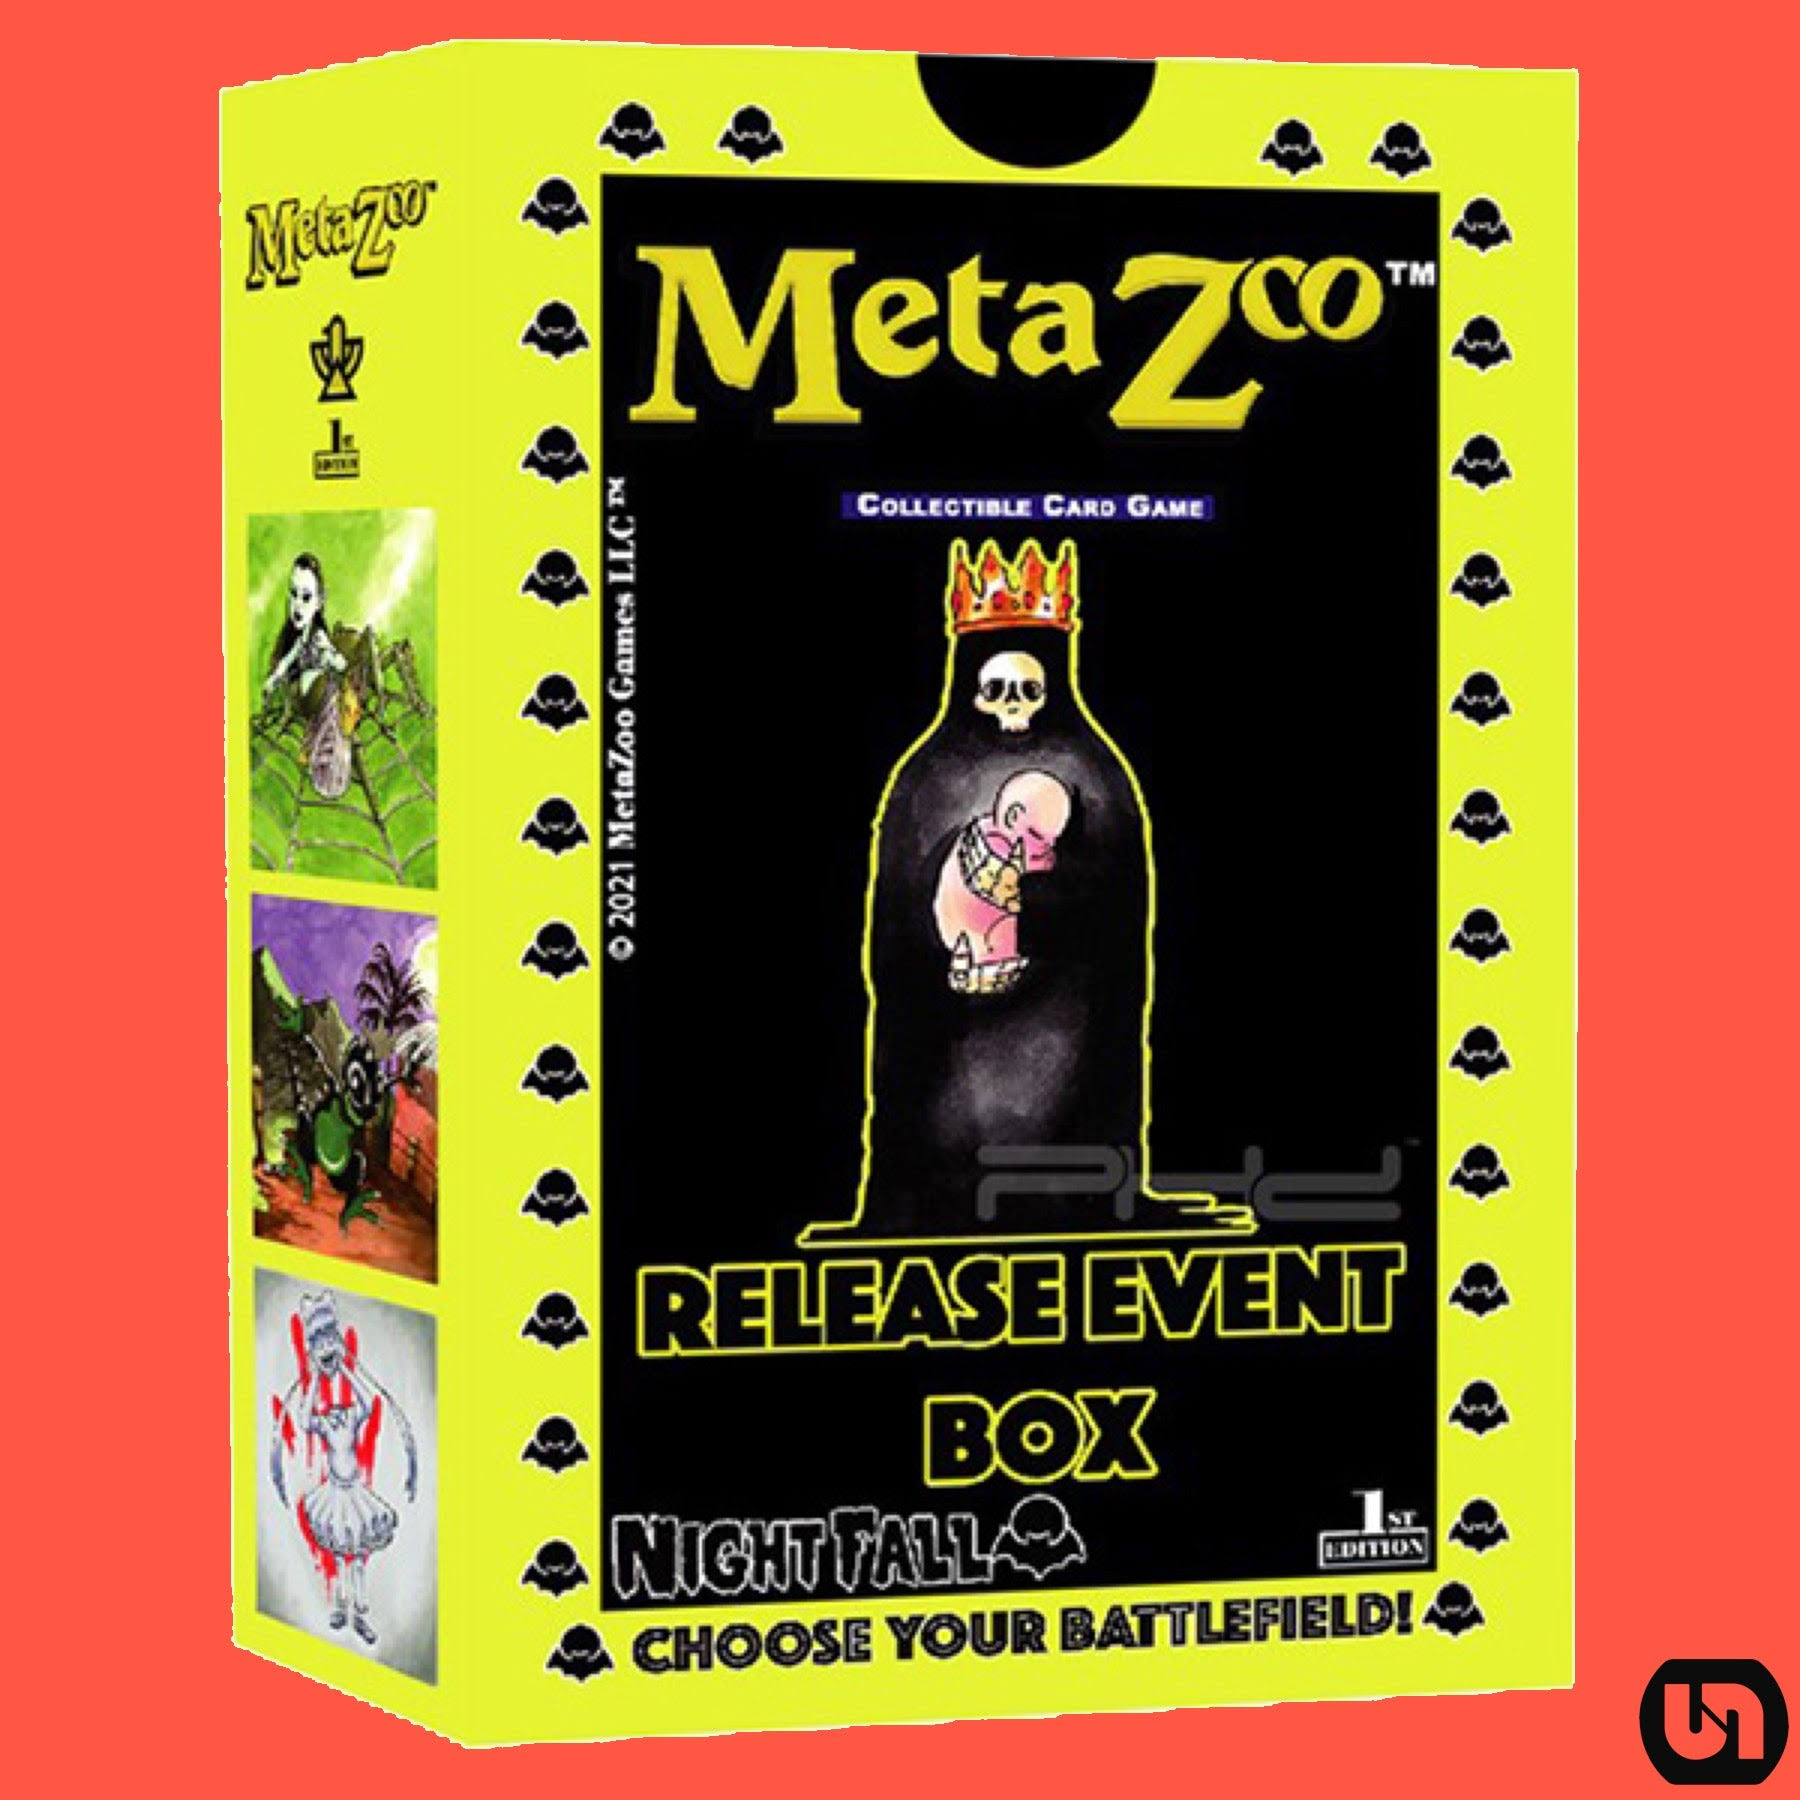 MetaZoo TCG Nightfall Release Event Box